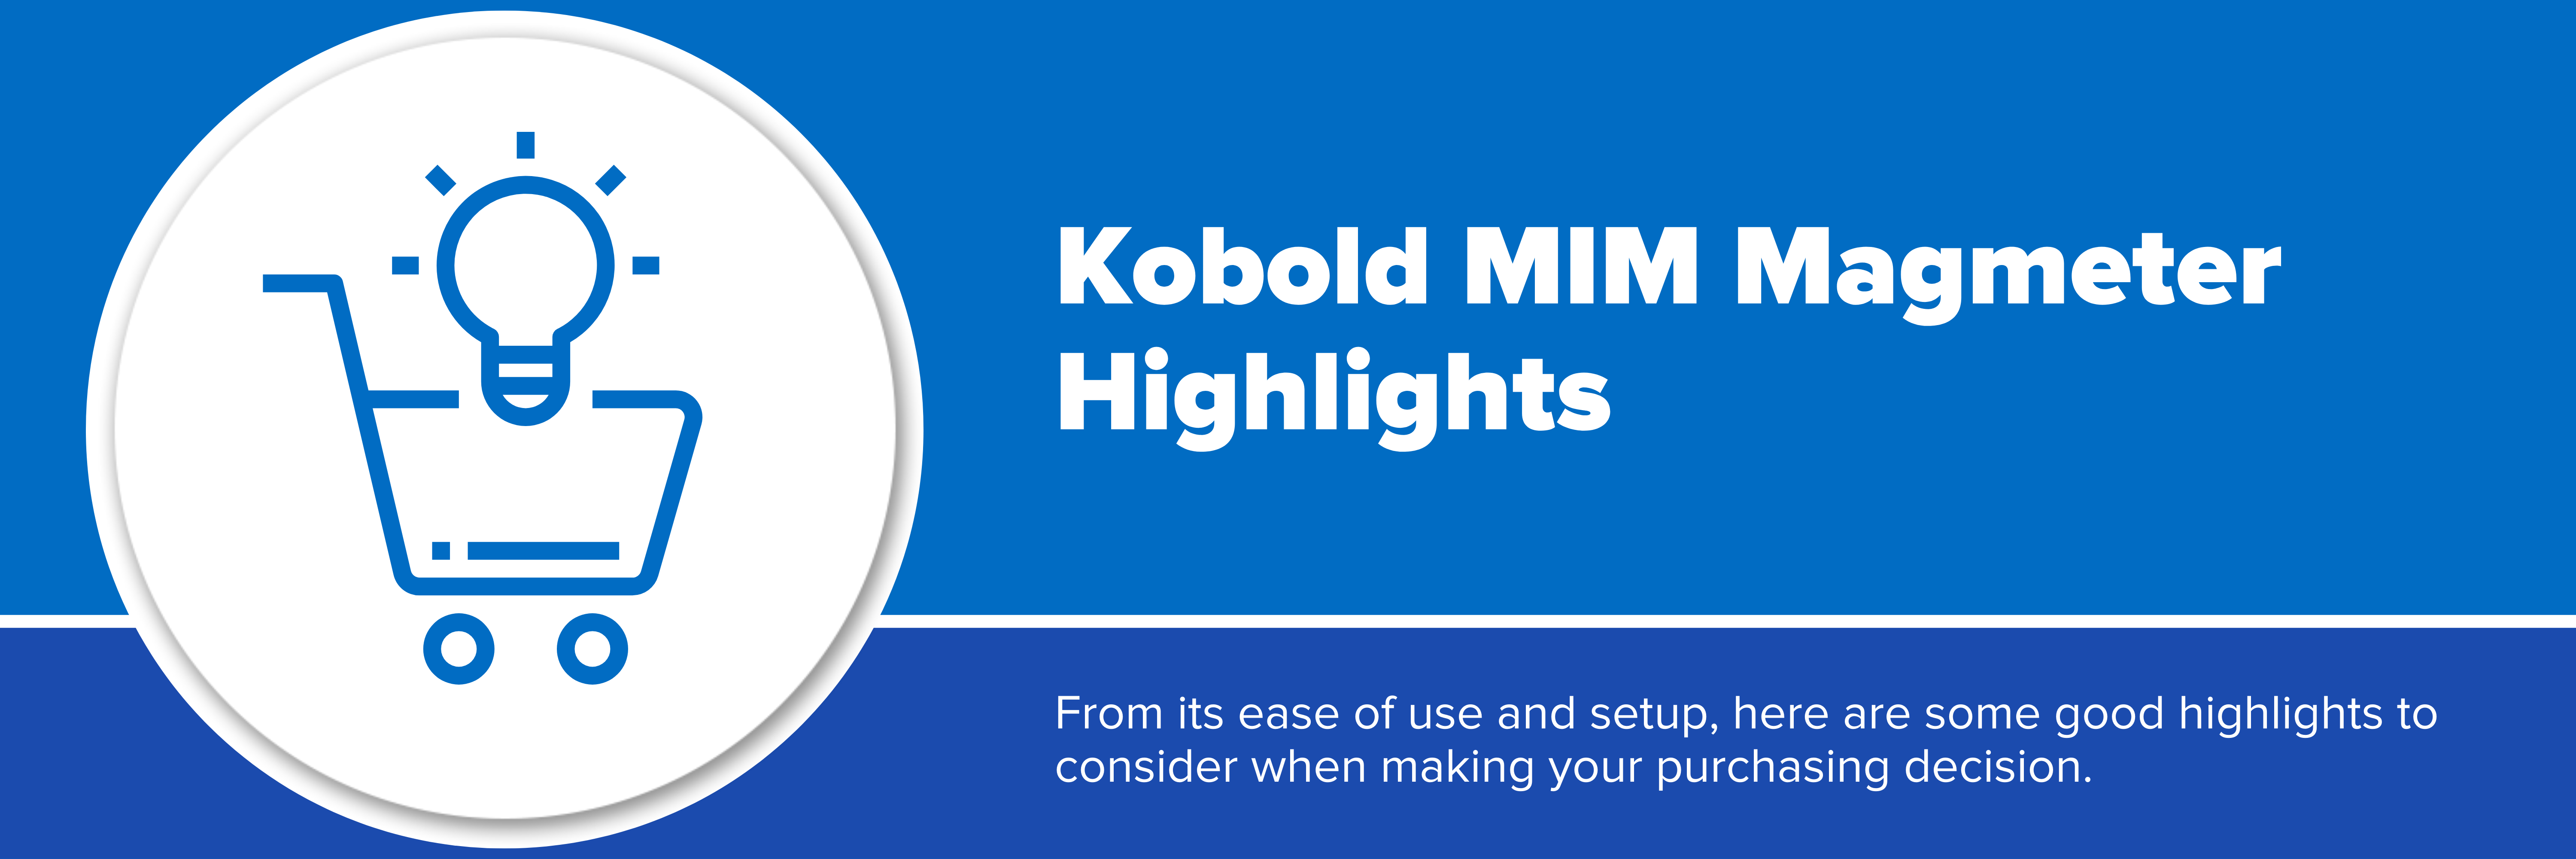 Header image with text "Kobold MIM Magmeter Highlights"